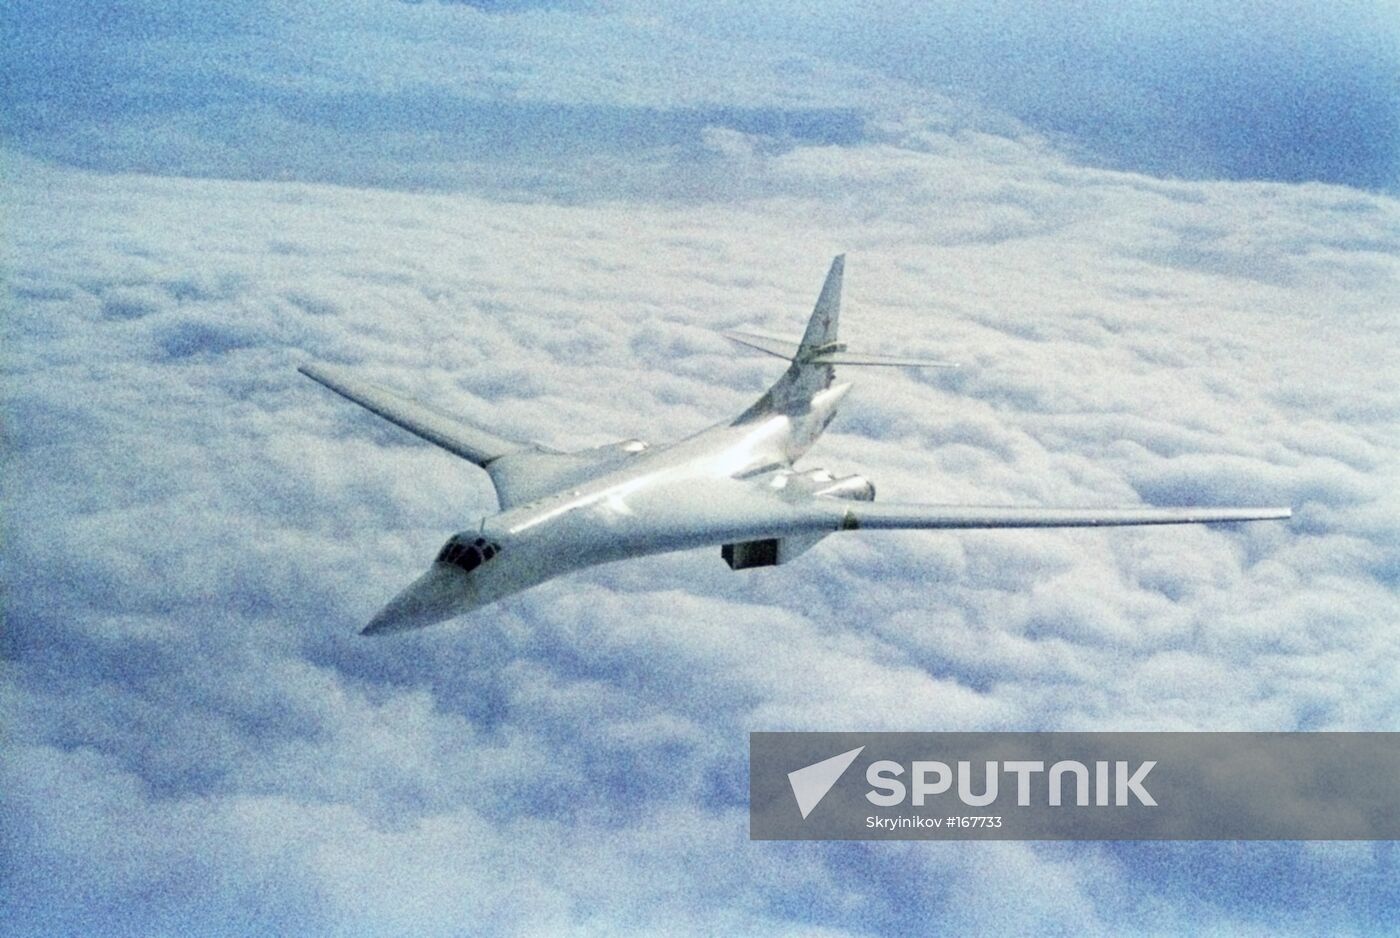 TU-160 aircraft flight 